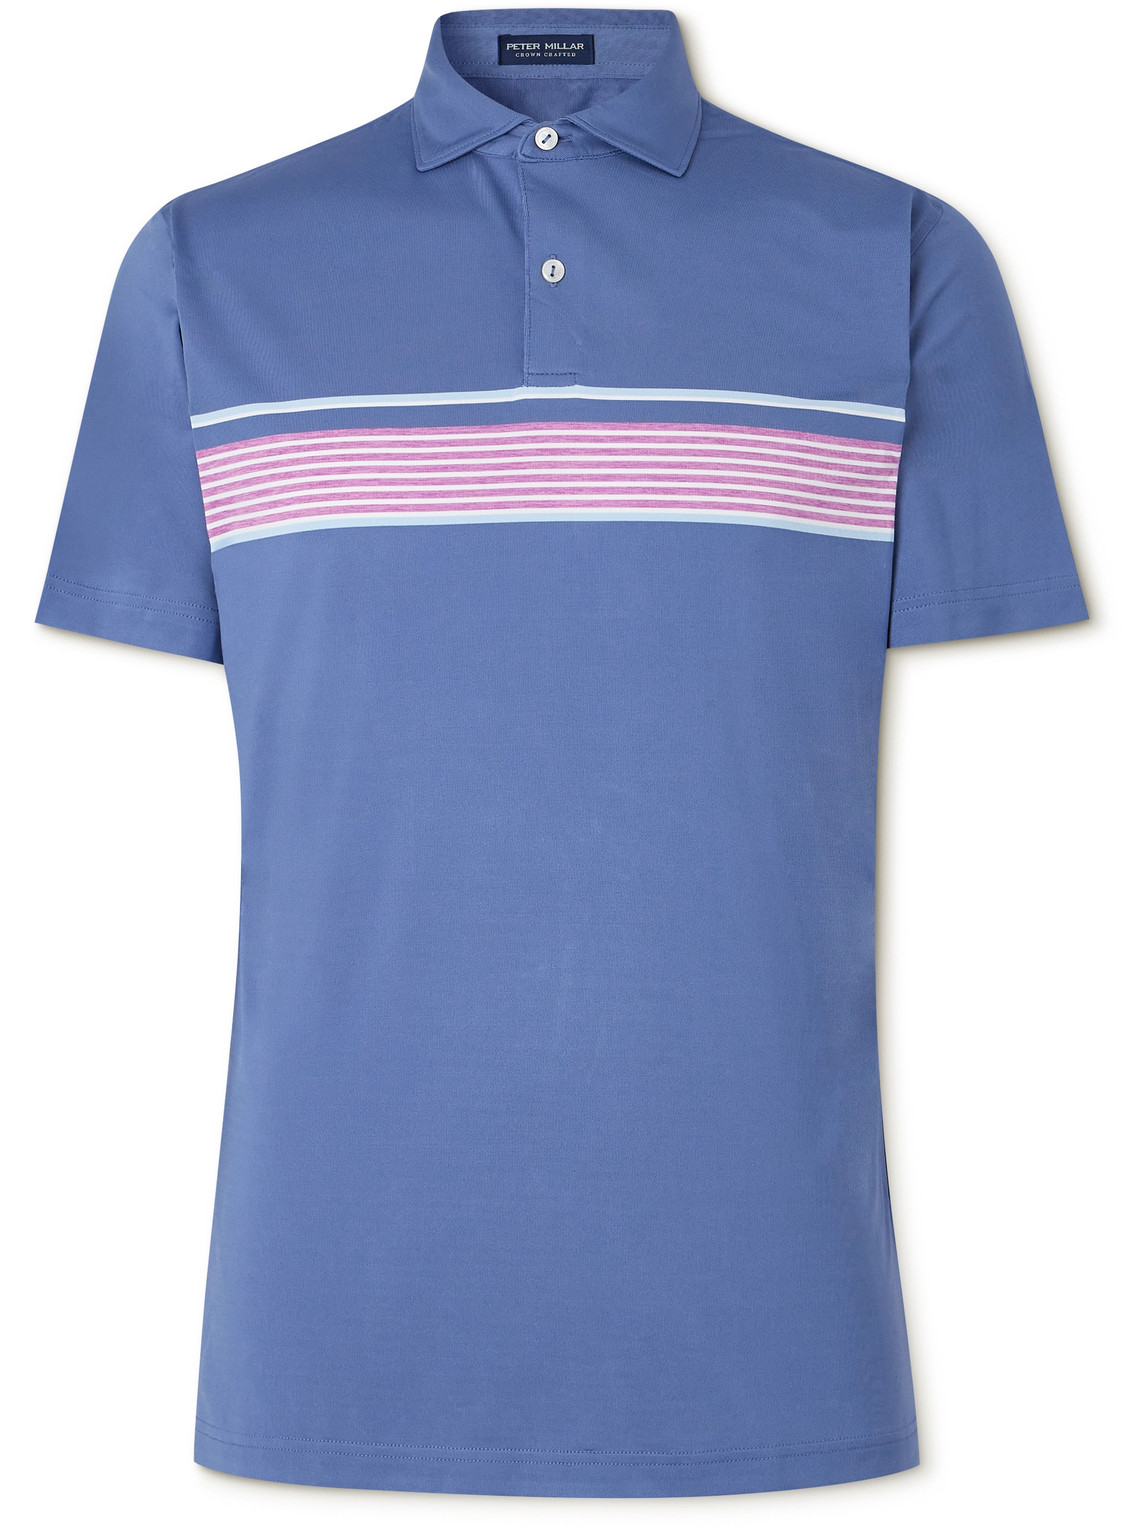 Ledger Performance Striped Tech-Jersey Golf Polo Shirt